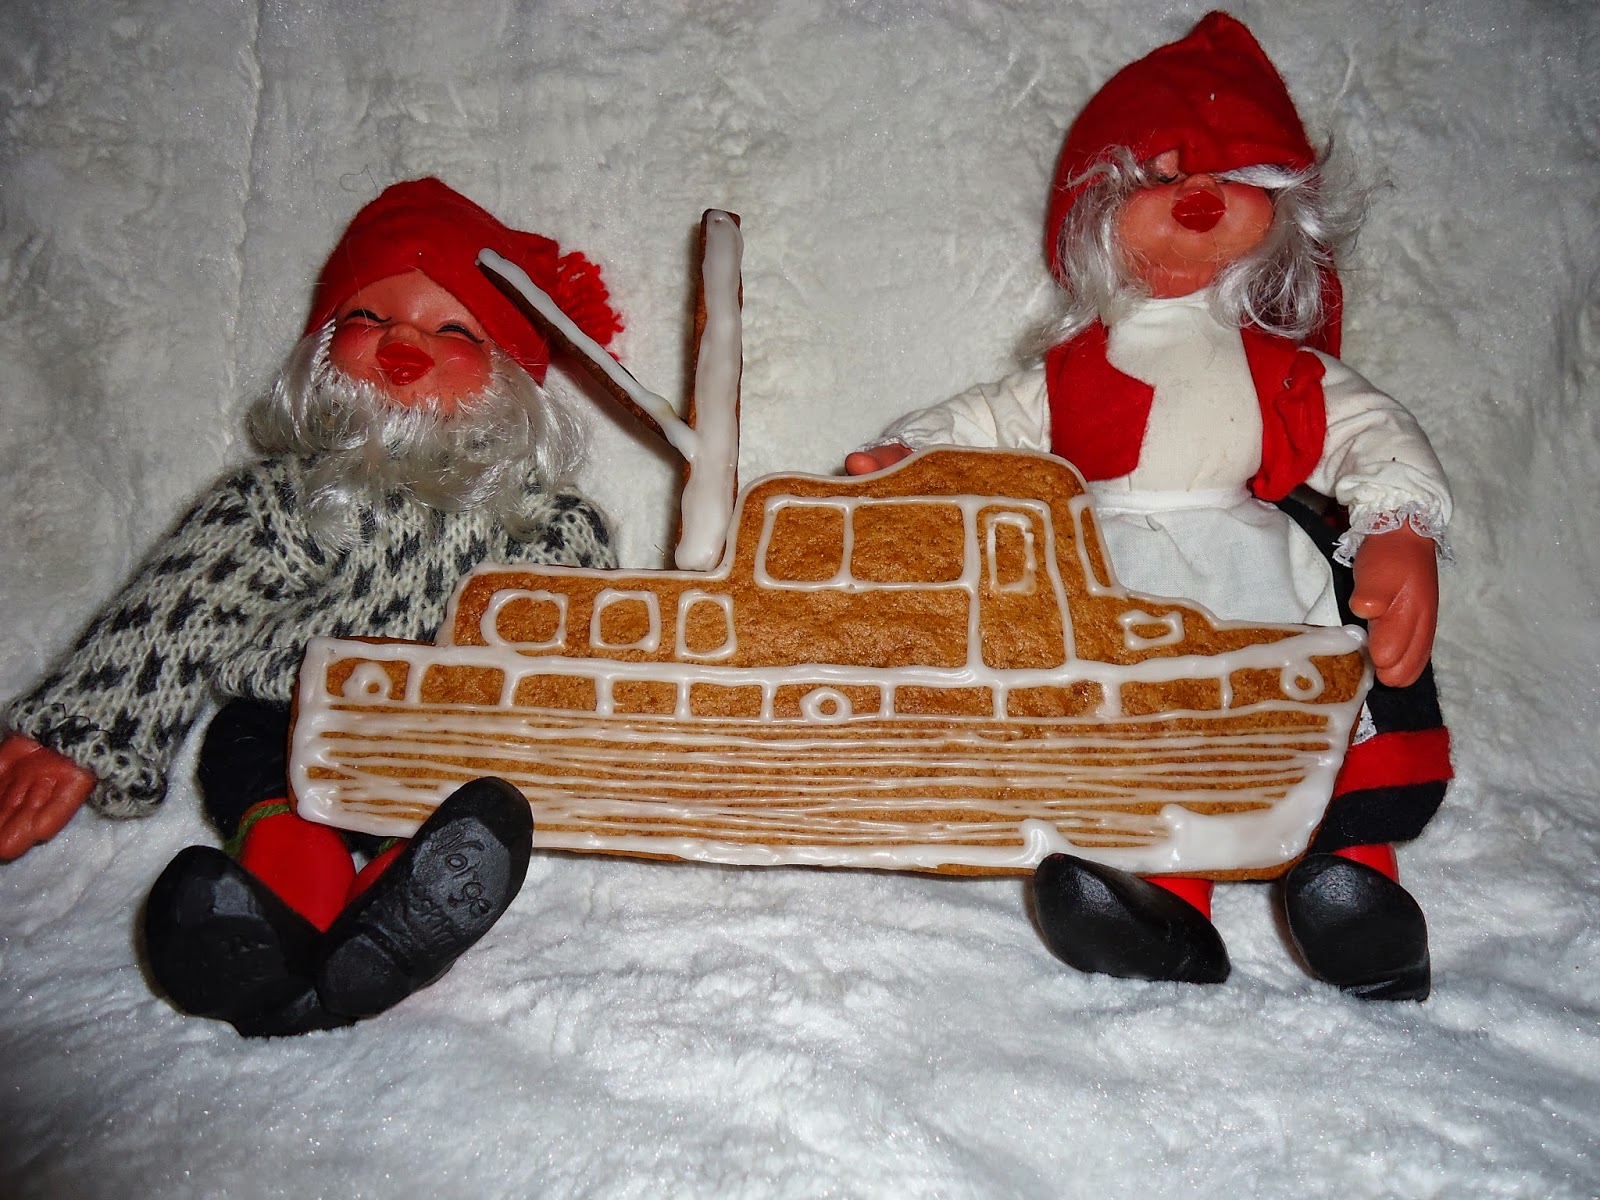 Trawler, pepperkake båt, trawler gingerbread